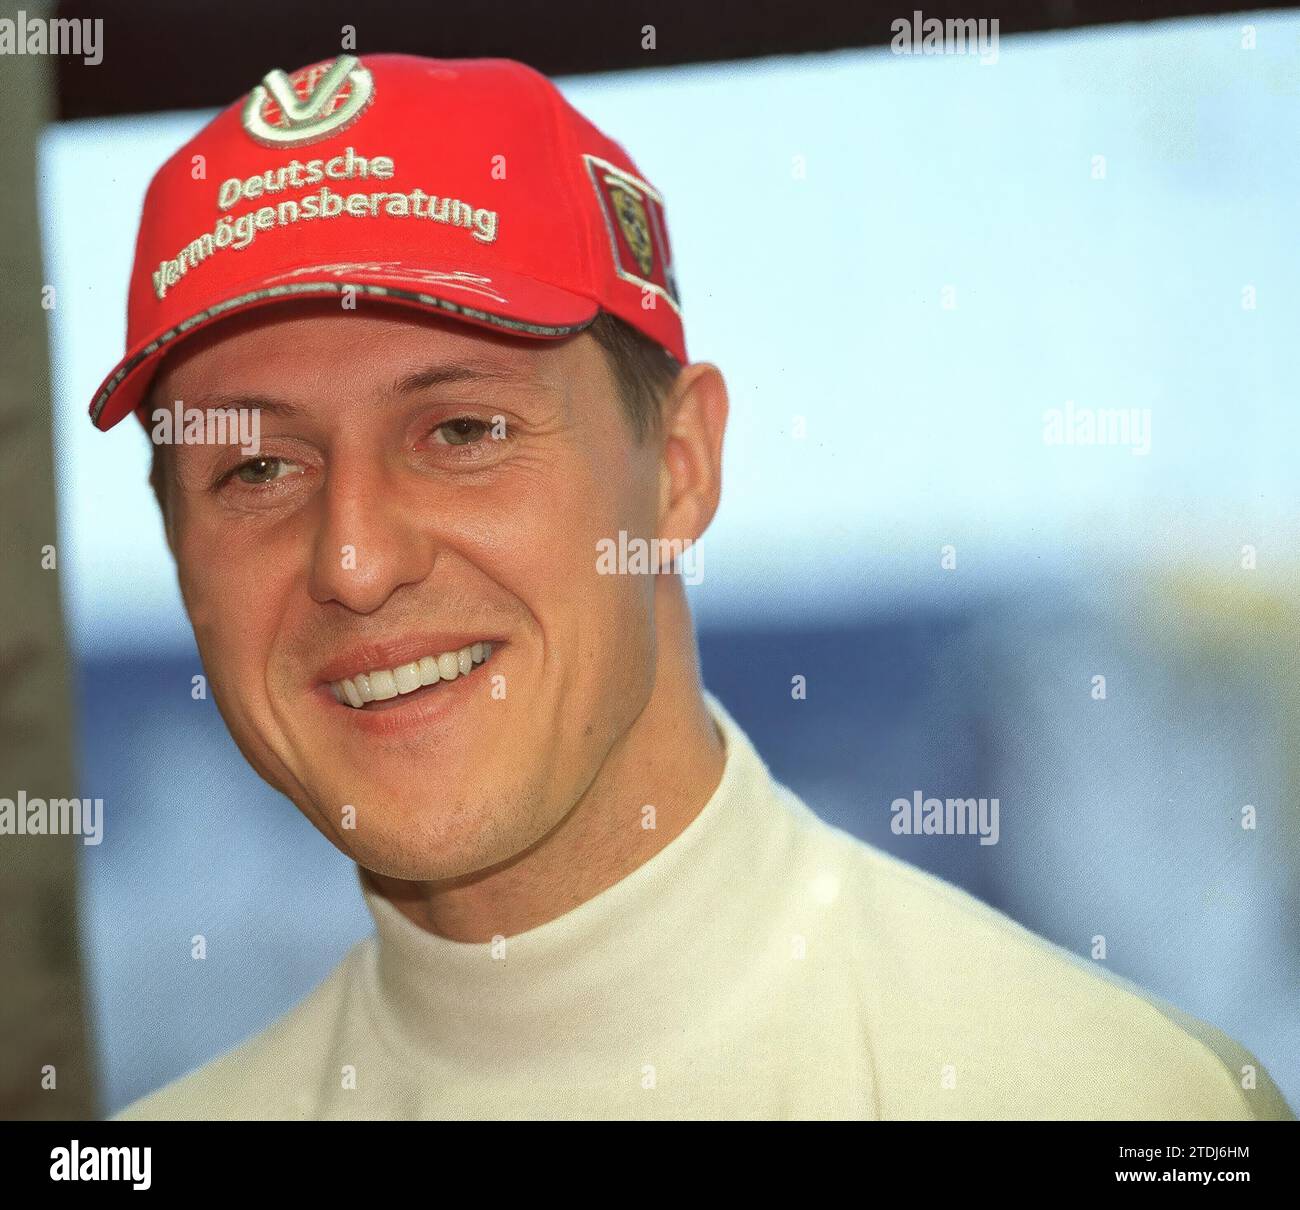 Barcelona. 3/22/2002. Interview mit Michael Schumacher. Foto: Yolanda Cardo....archdc. Quelle: Album / Archivo ABC / Yolanda Cardo Stockfoto